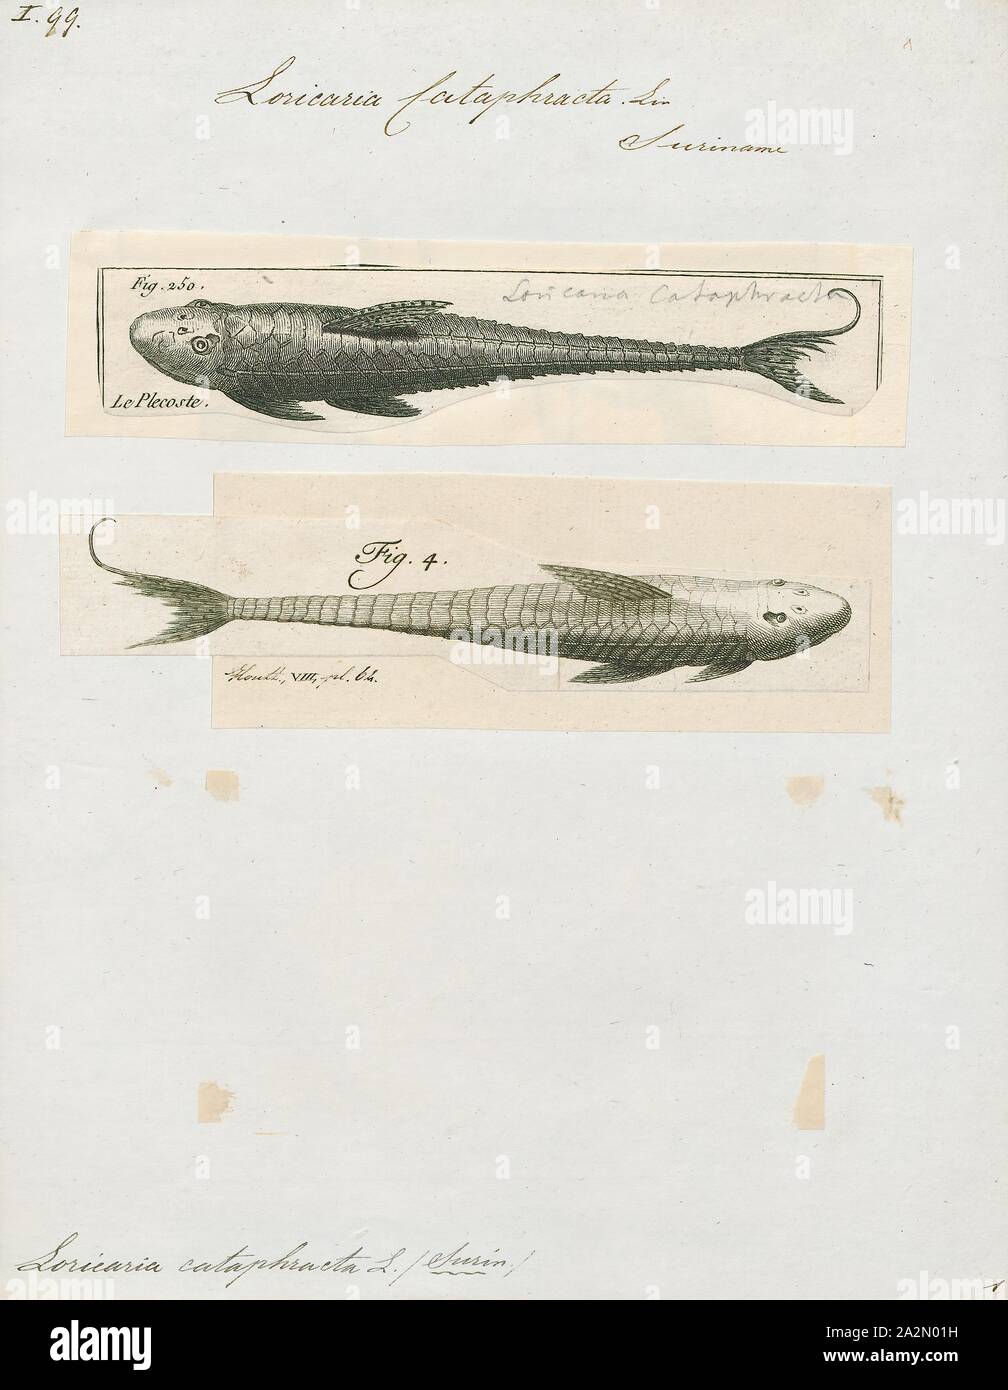 Loricaria cataphracta, Print, Loricaria cataphracta or the chocolate loricariid is a member of the Loricaria genus of armored catfish., 1700-1880 Stock Photo